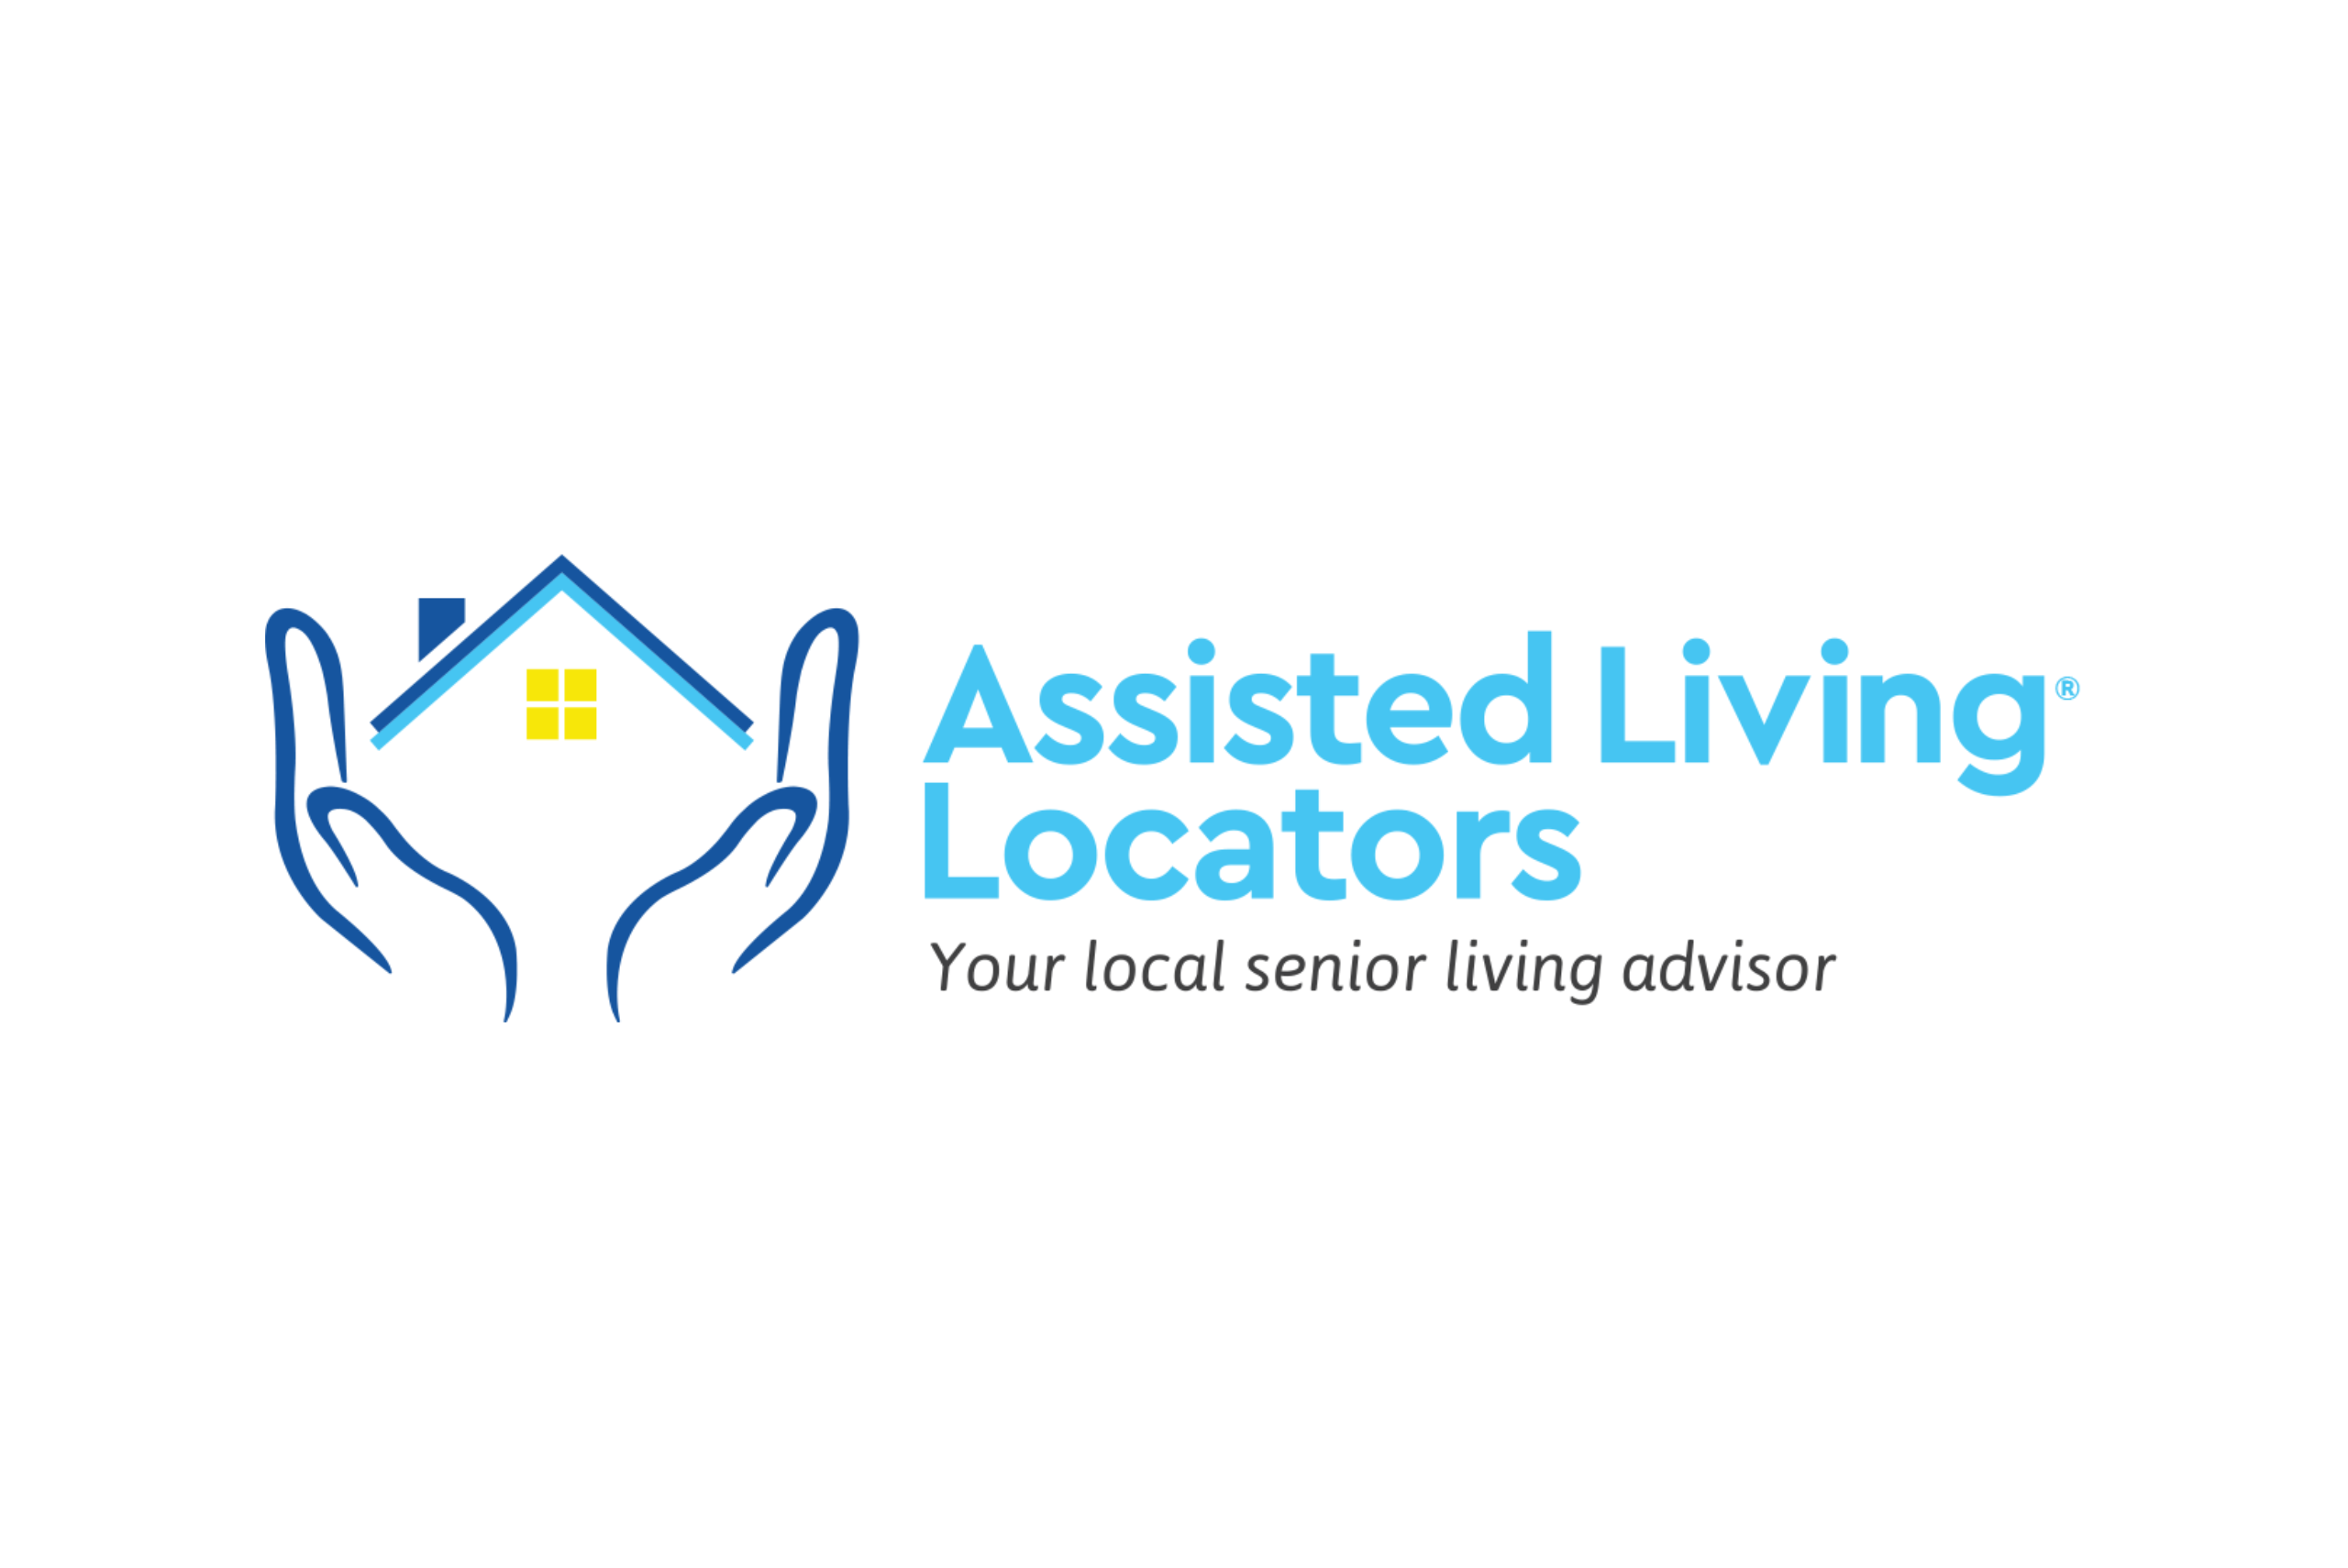 Assisted Living Locators logo